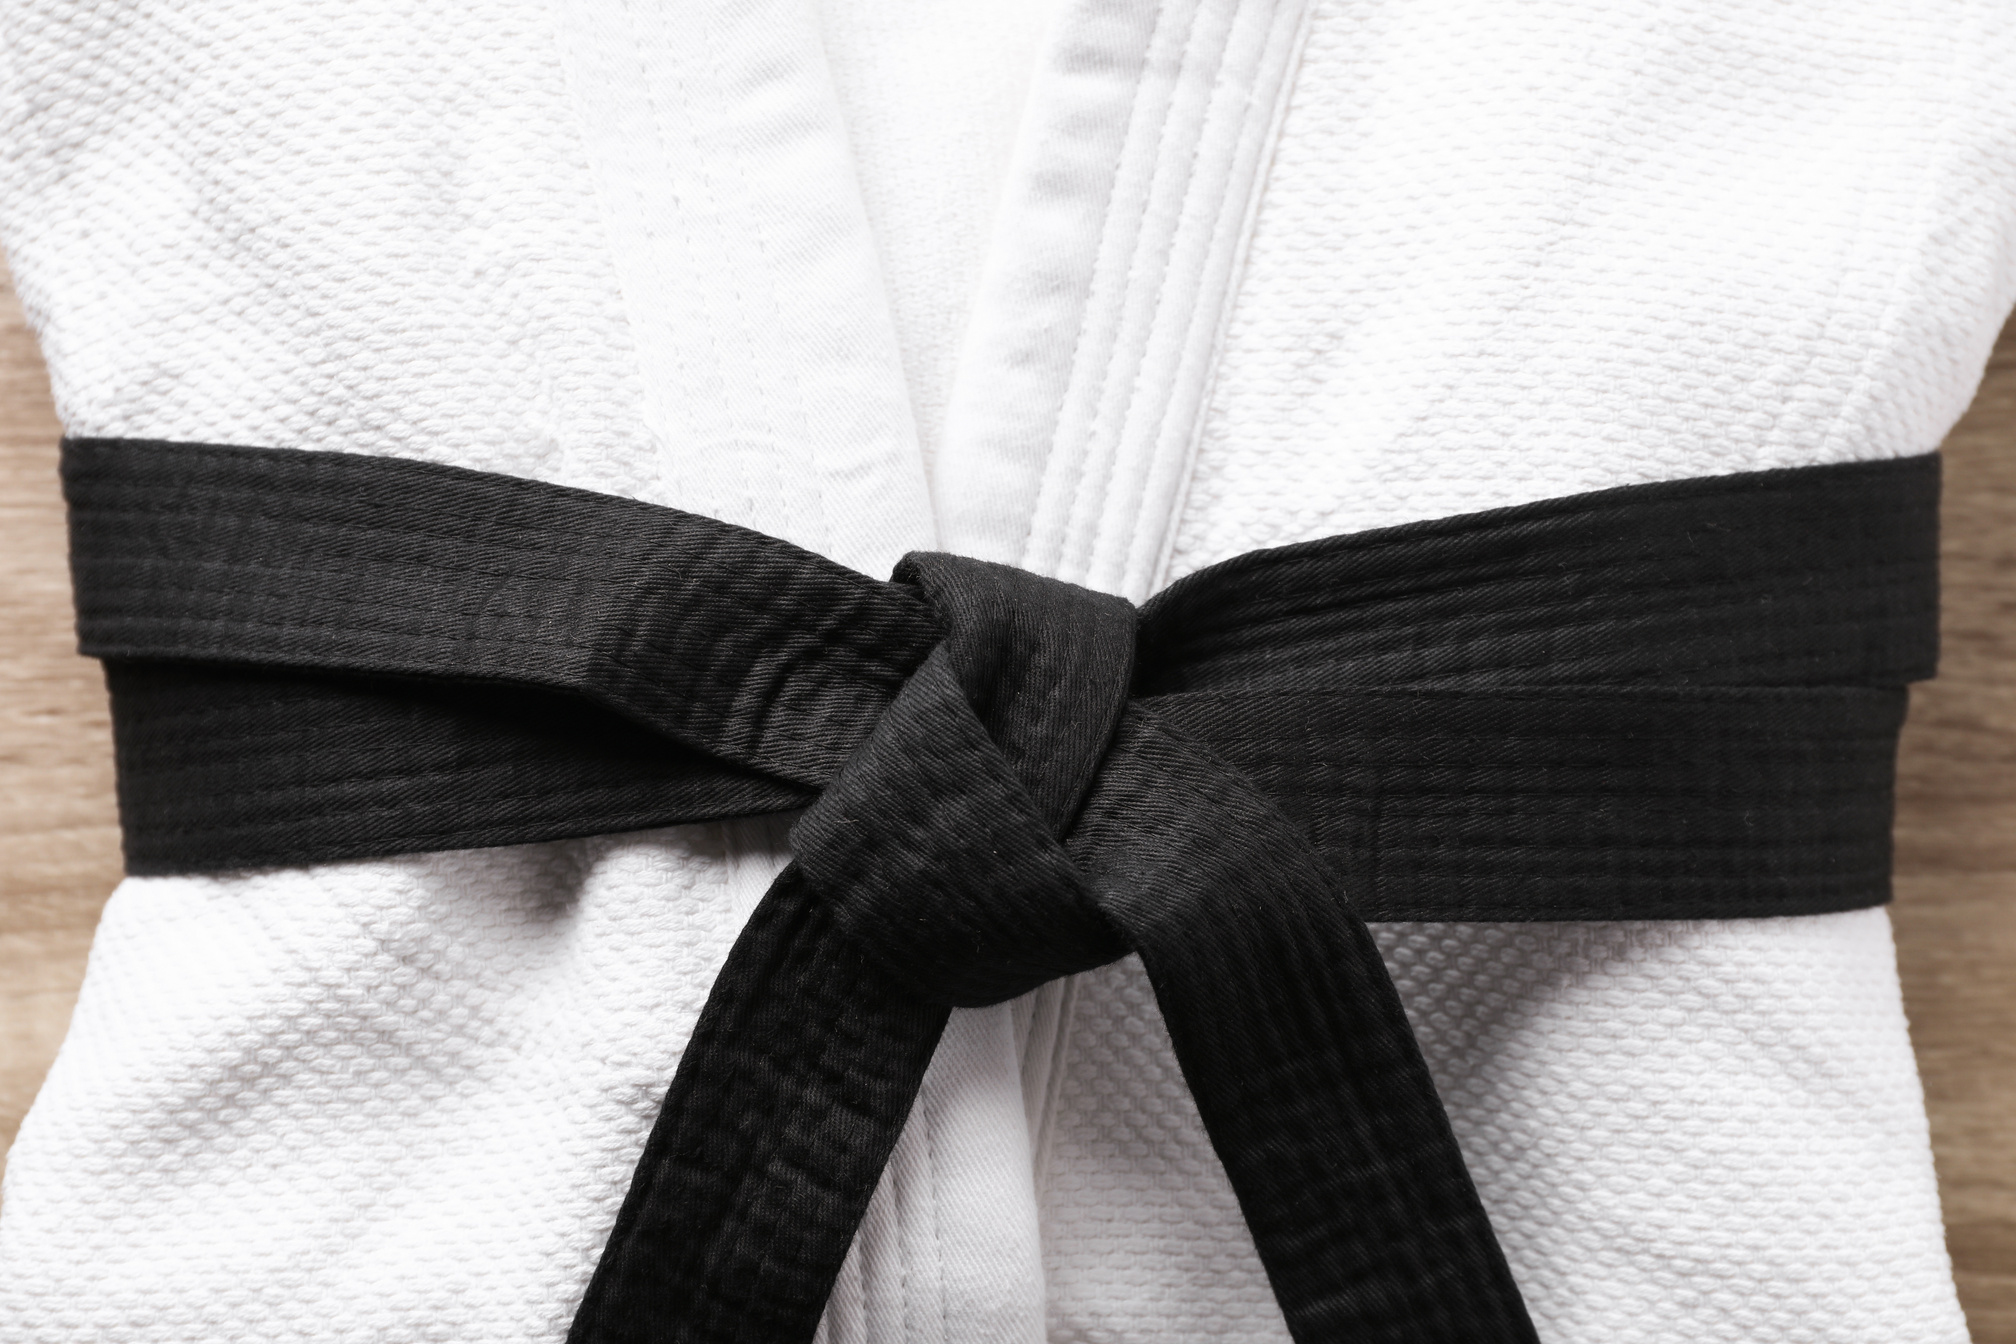 Martial Arts Uniform with Black Belt on White Wooden Background, Closeup